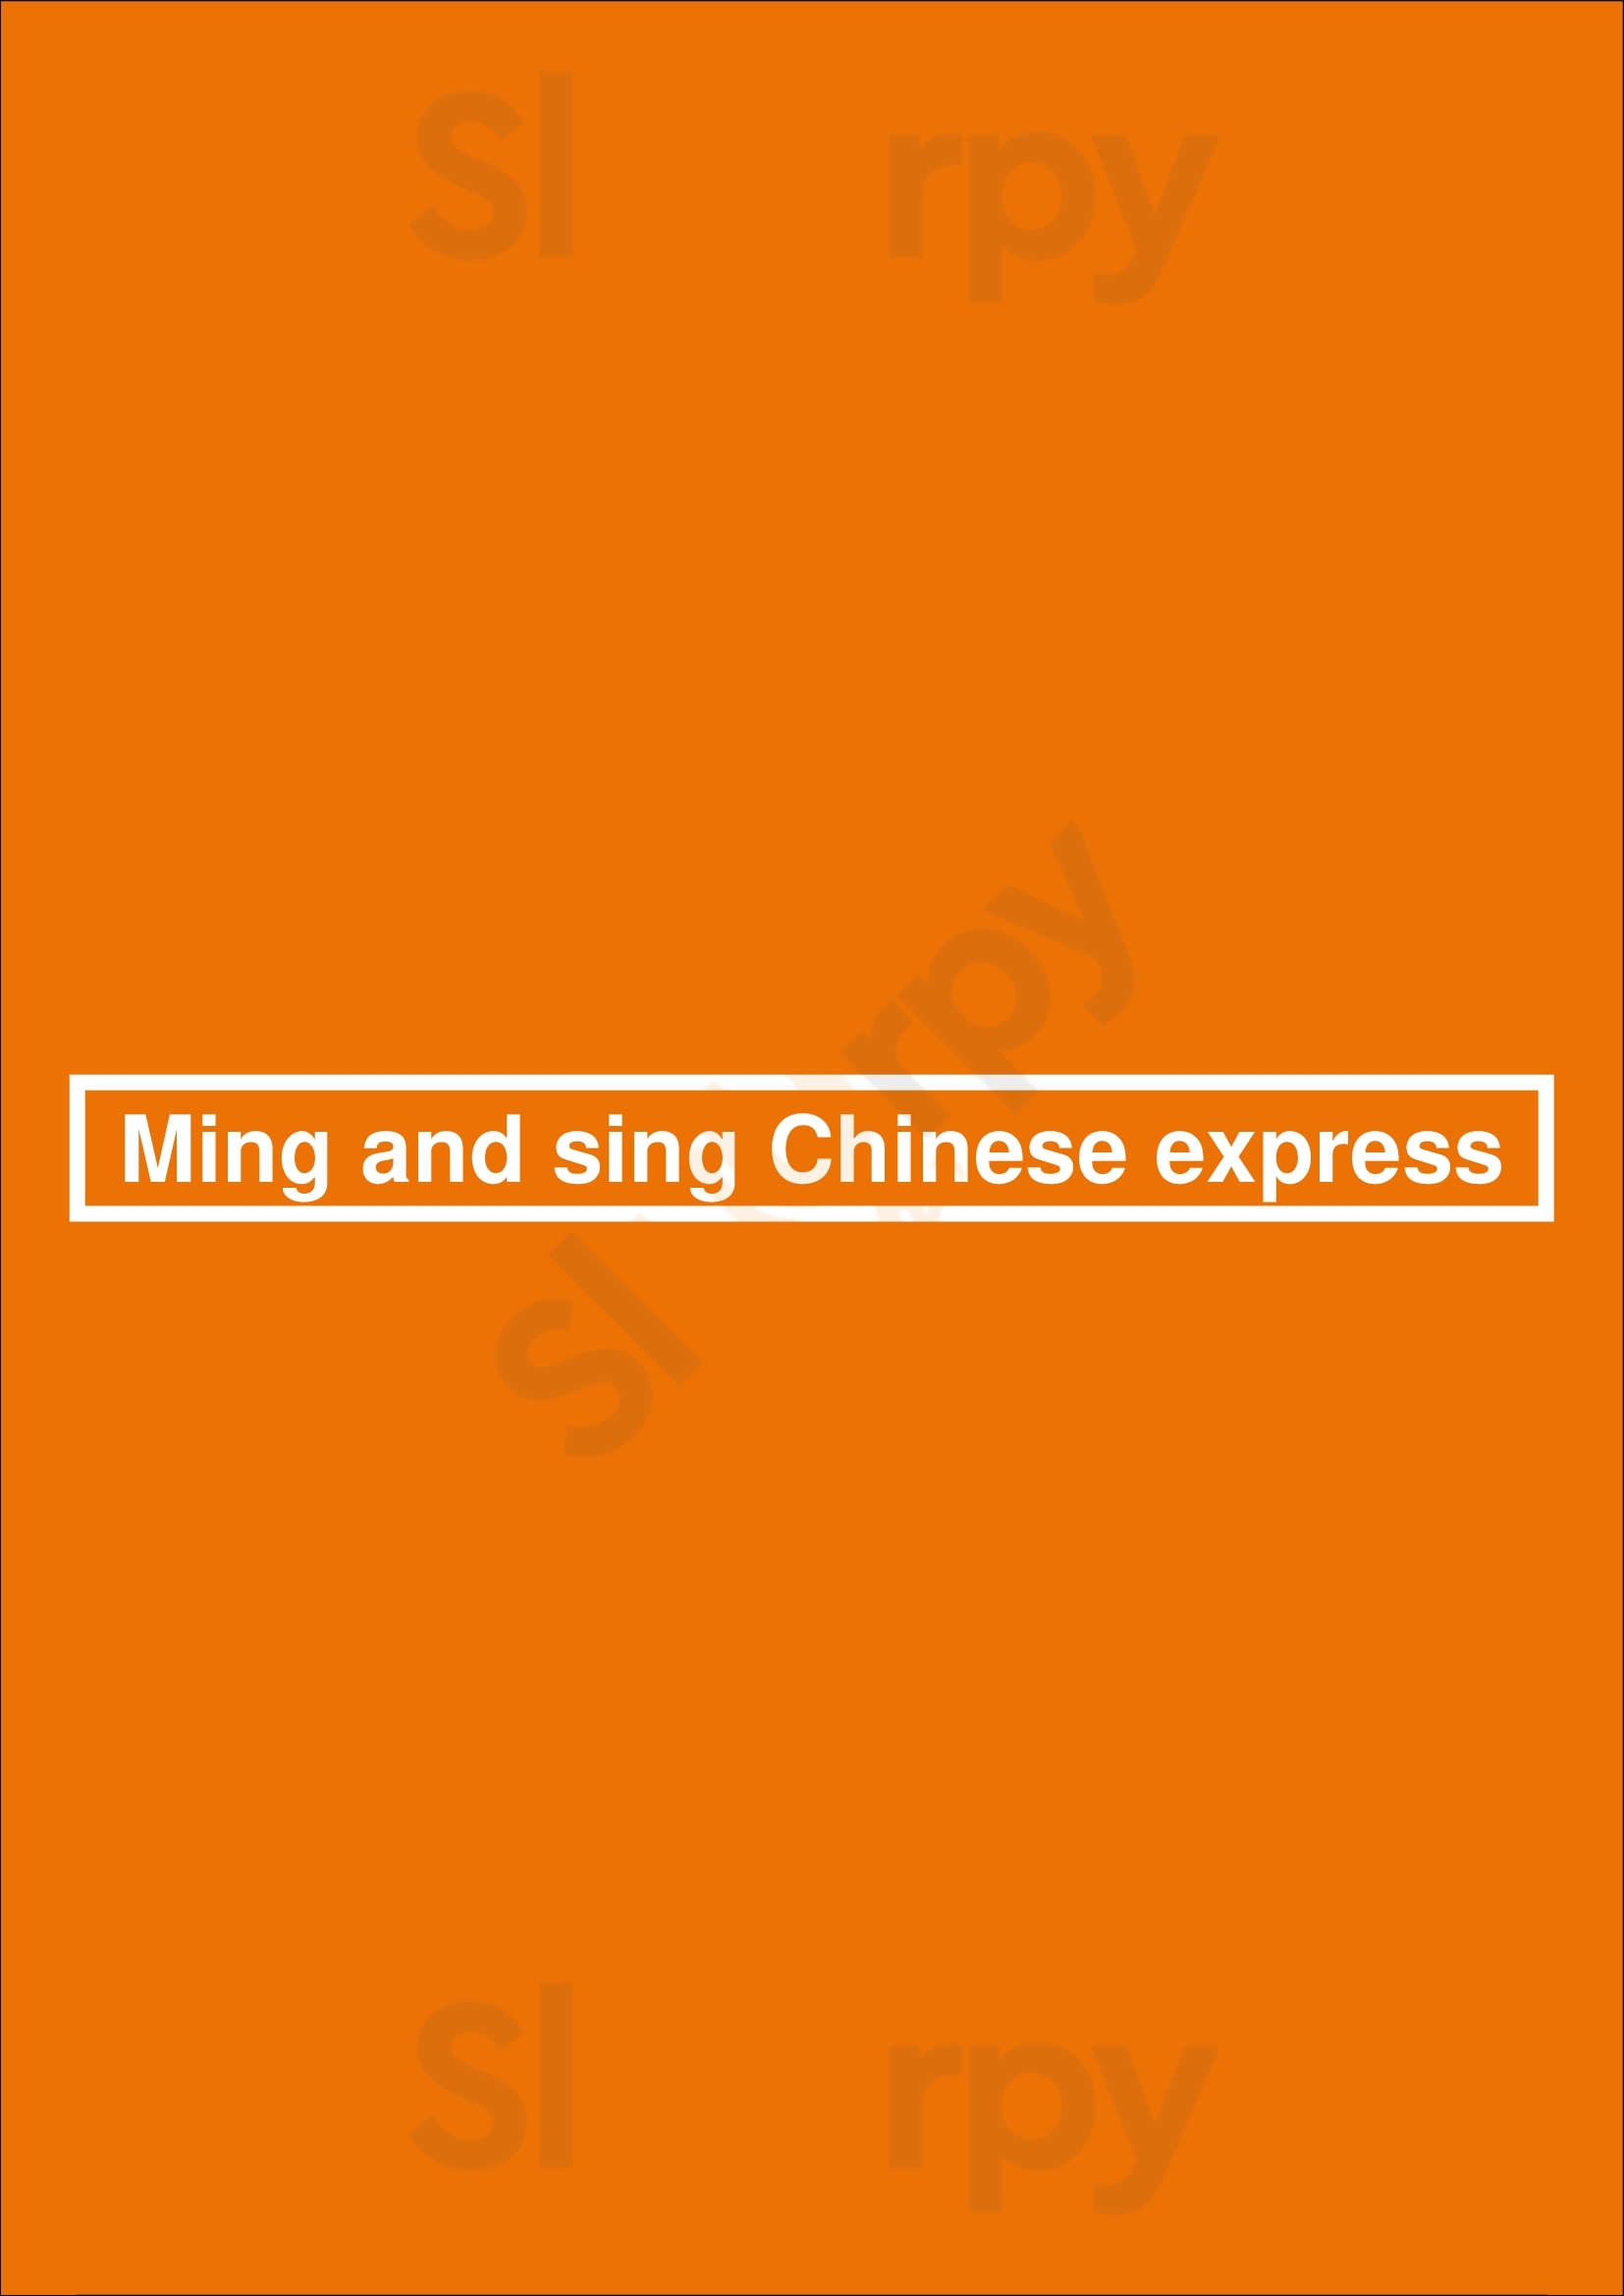 Ming And Sing Chinese Express Langley City Menu - 1